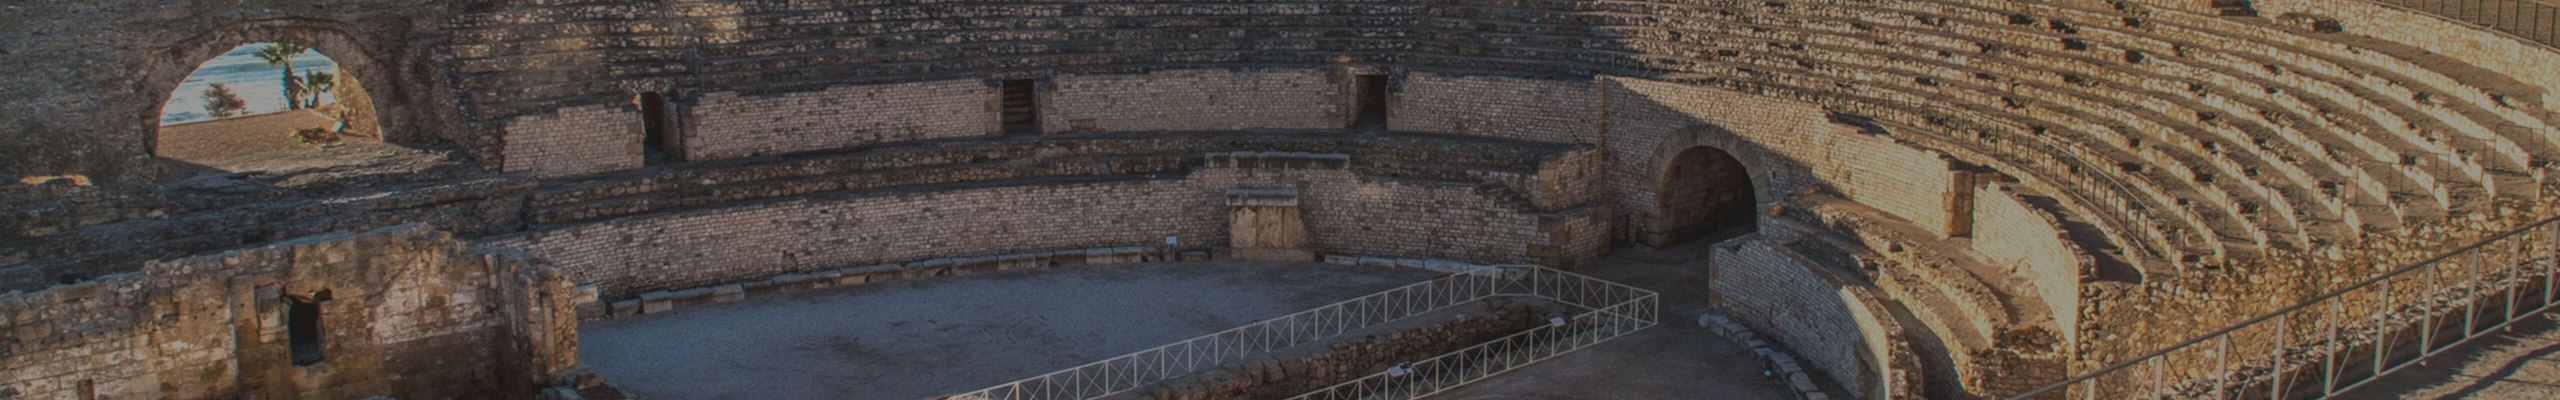 SEAT fans choose Tarraco – Roman ruins